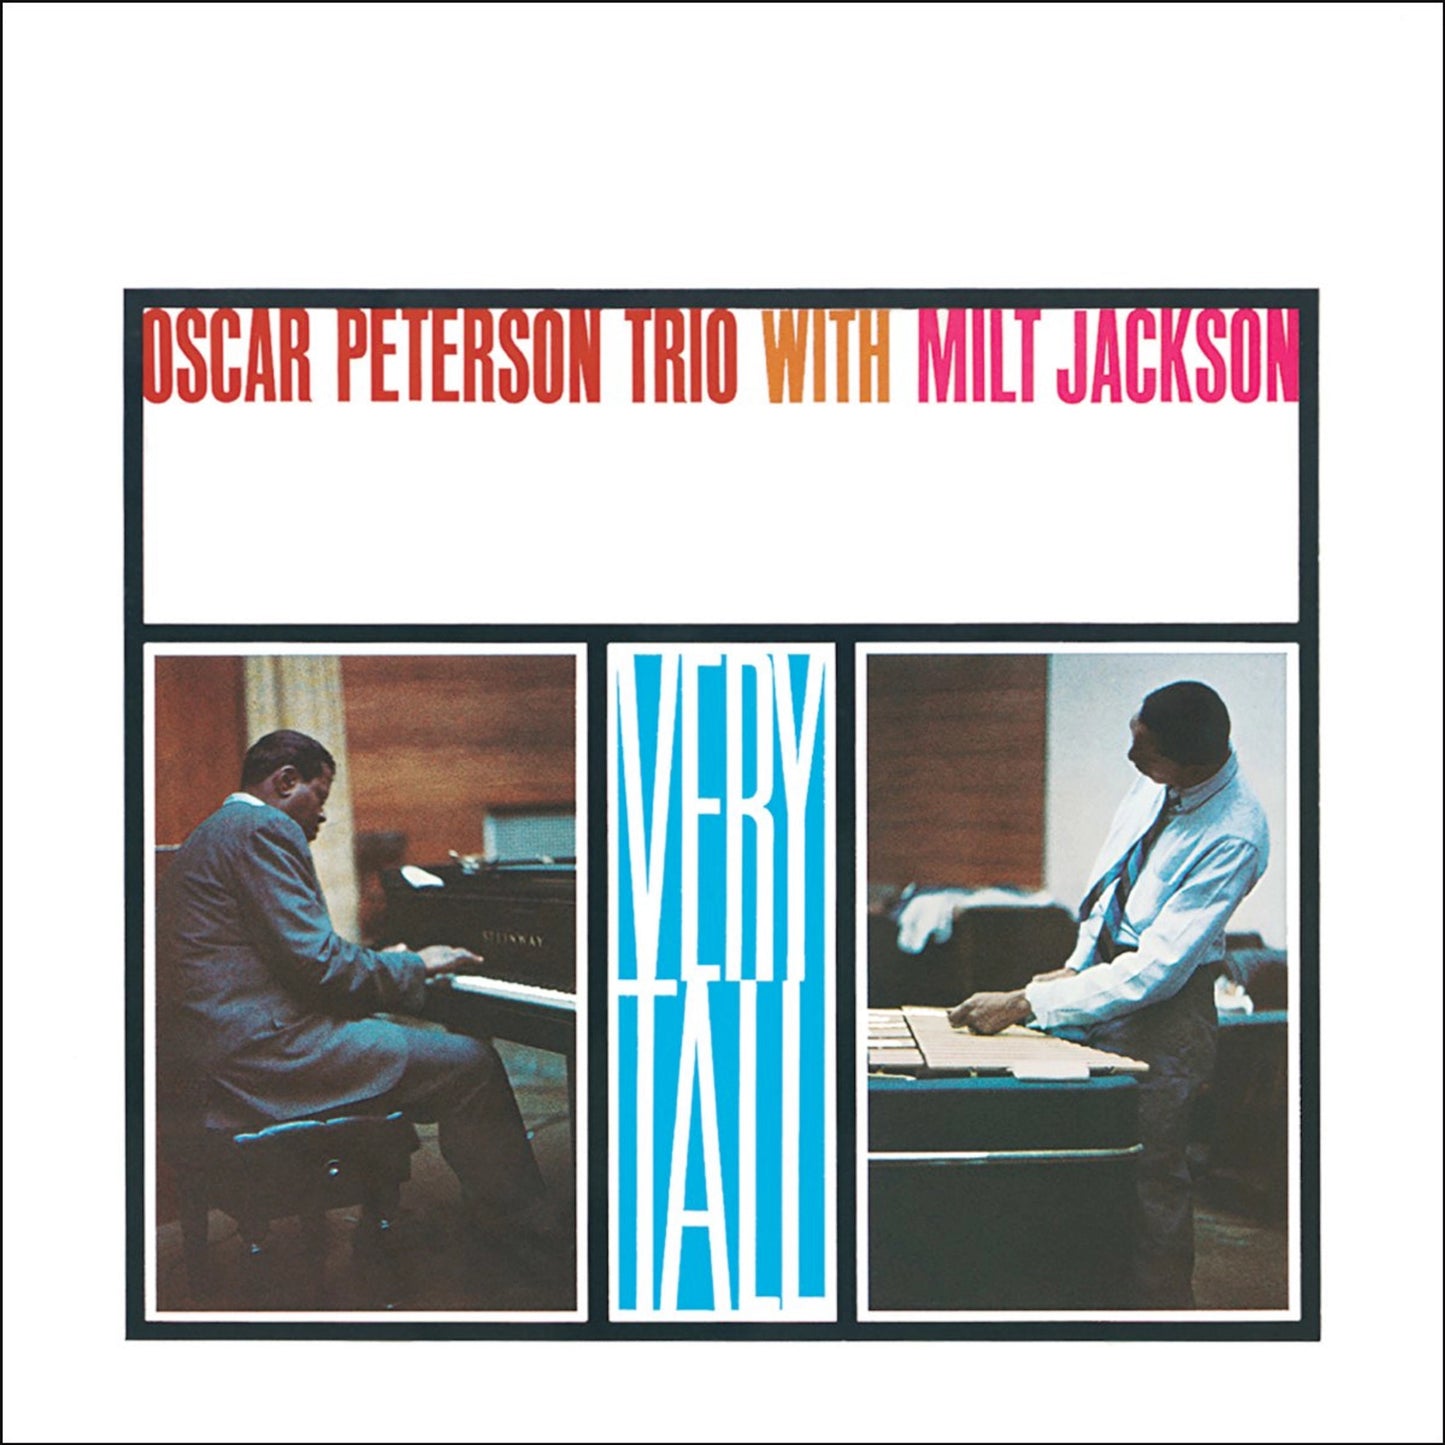 (Prepedido) Oscar Peterson Trio con Milt Jackson - Very Tall - Verve Series LP *